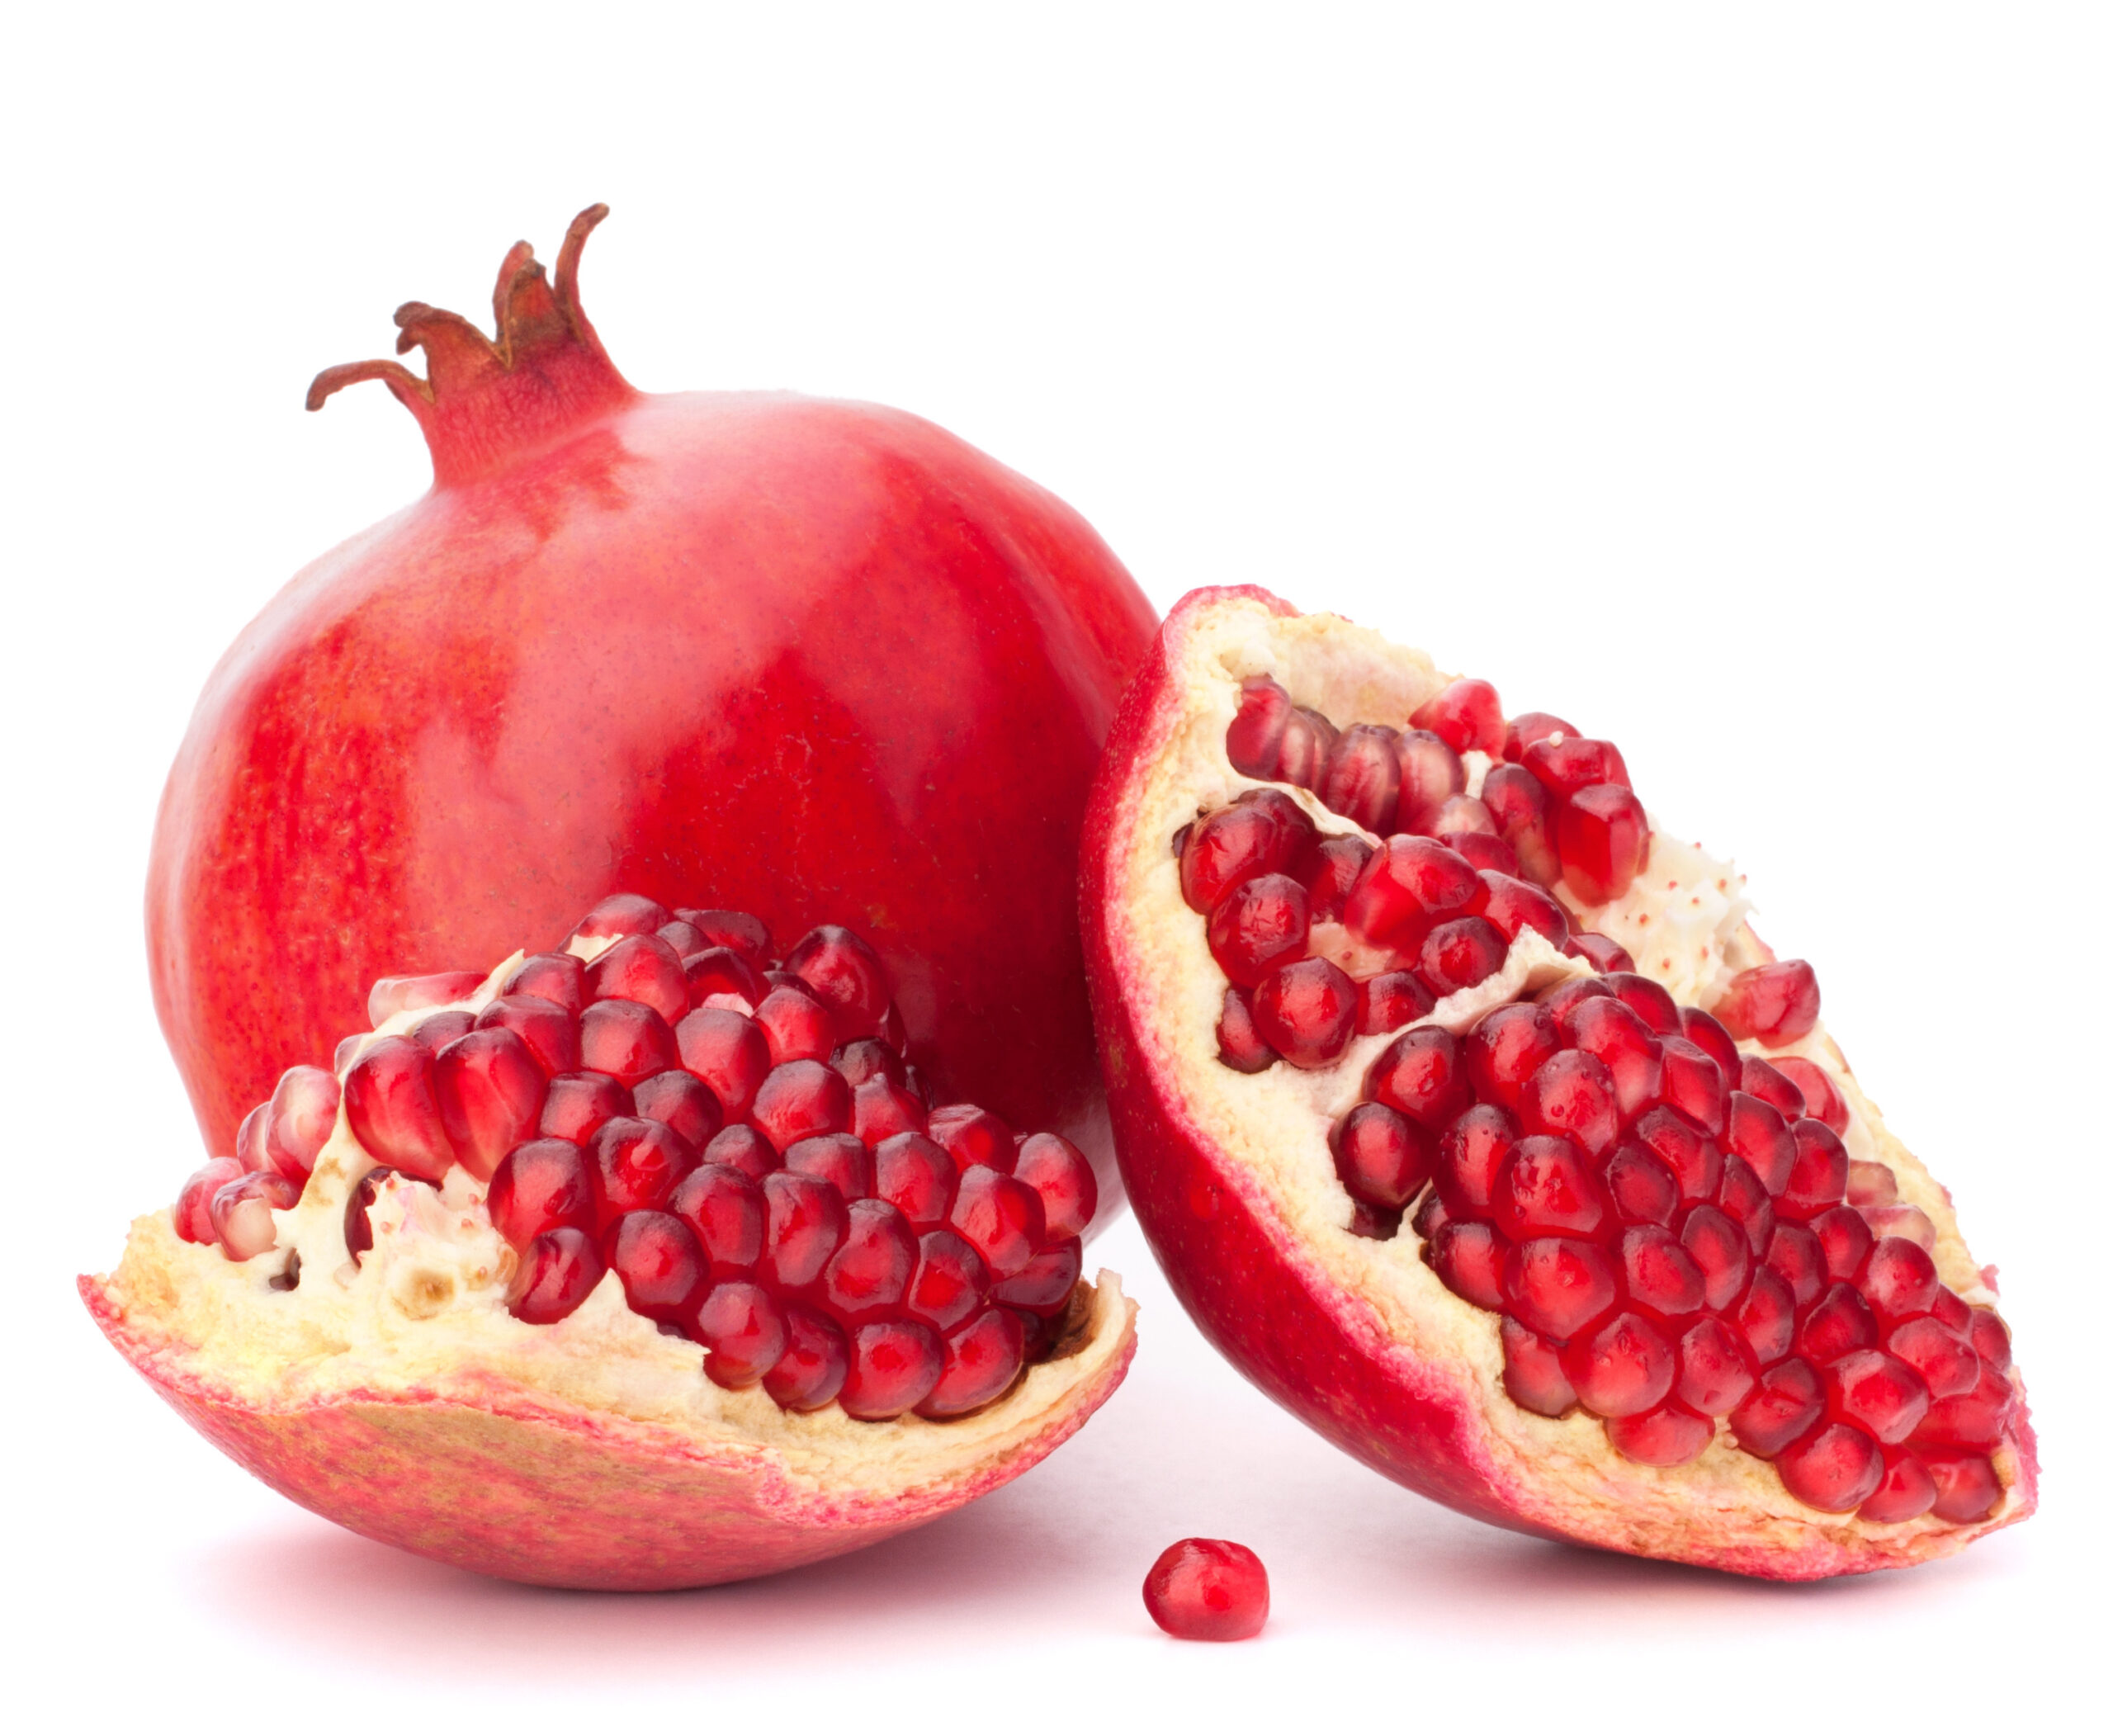 cut pomegranate